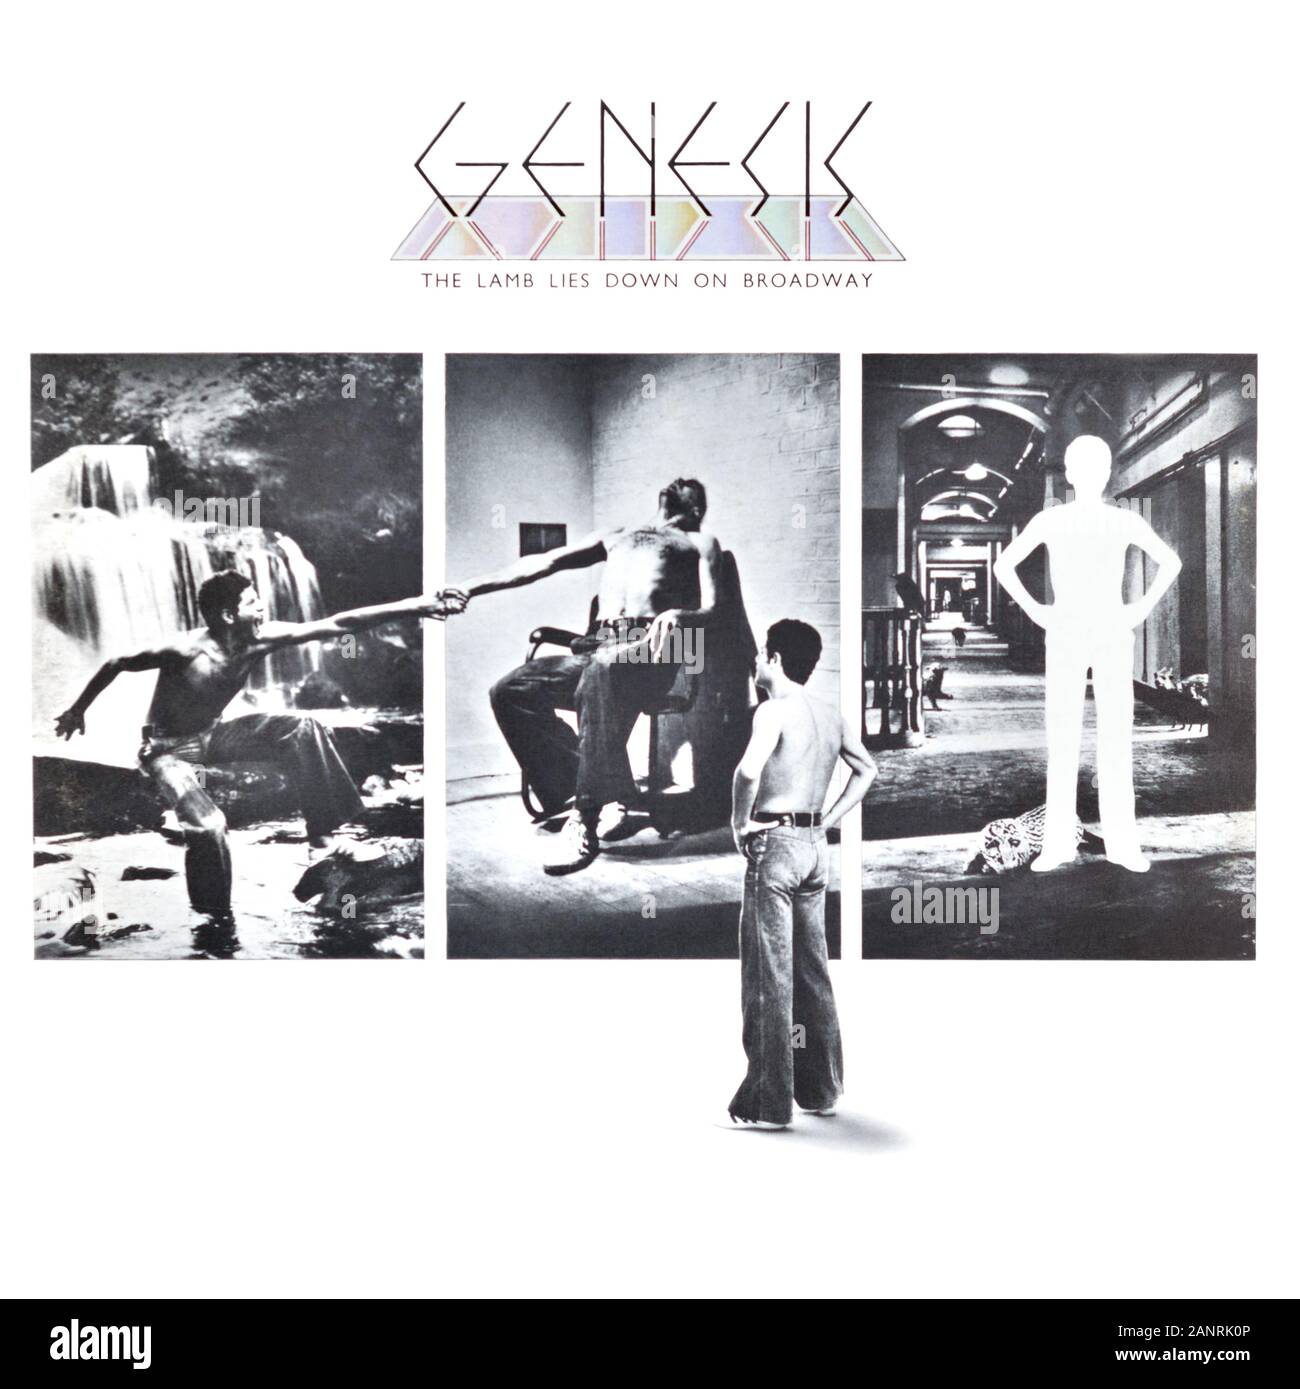 Genesis - original Vinyl Album Cover - The Lamb Lies Down on Broadway - 1974 Stockfoto